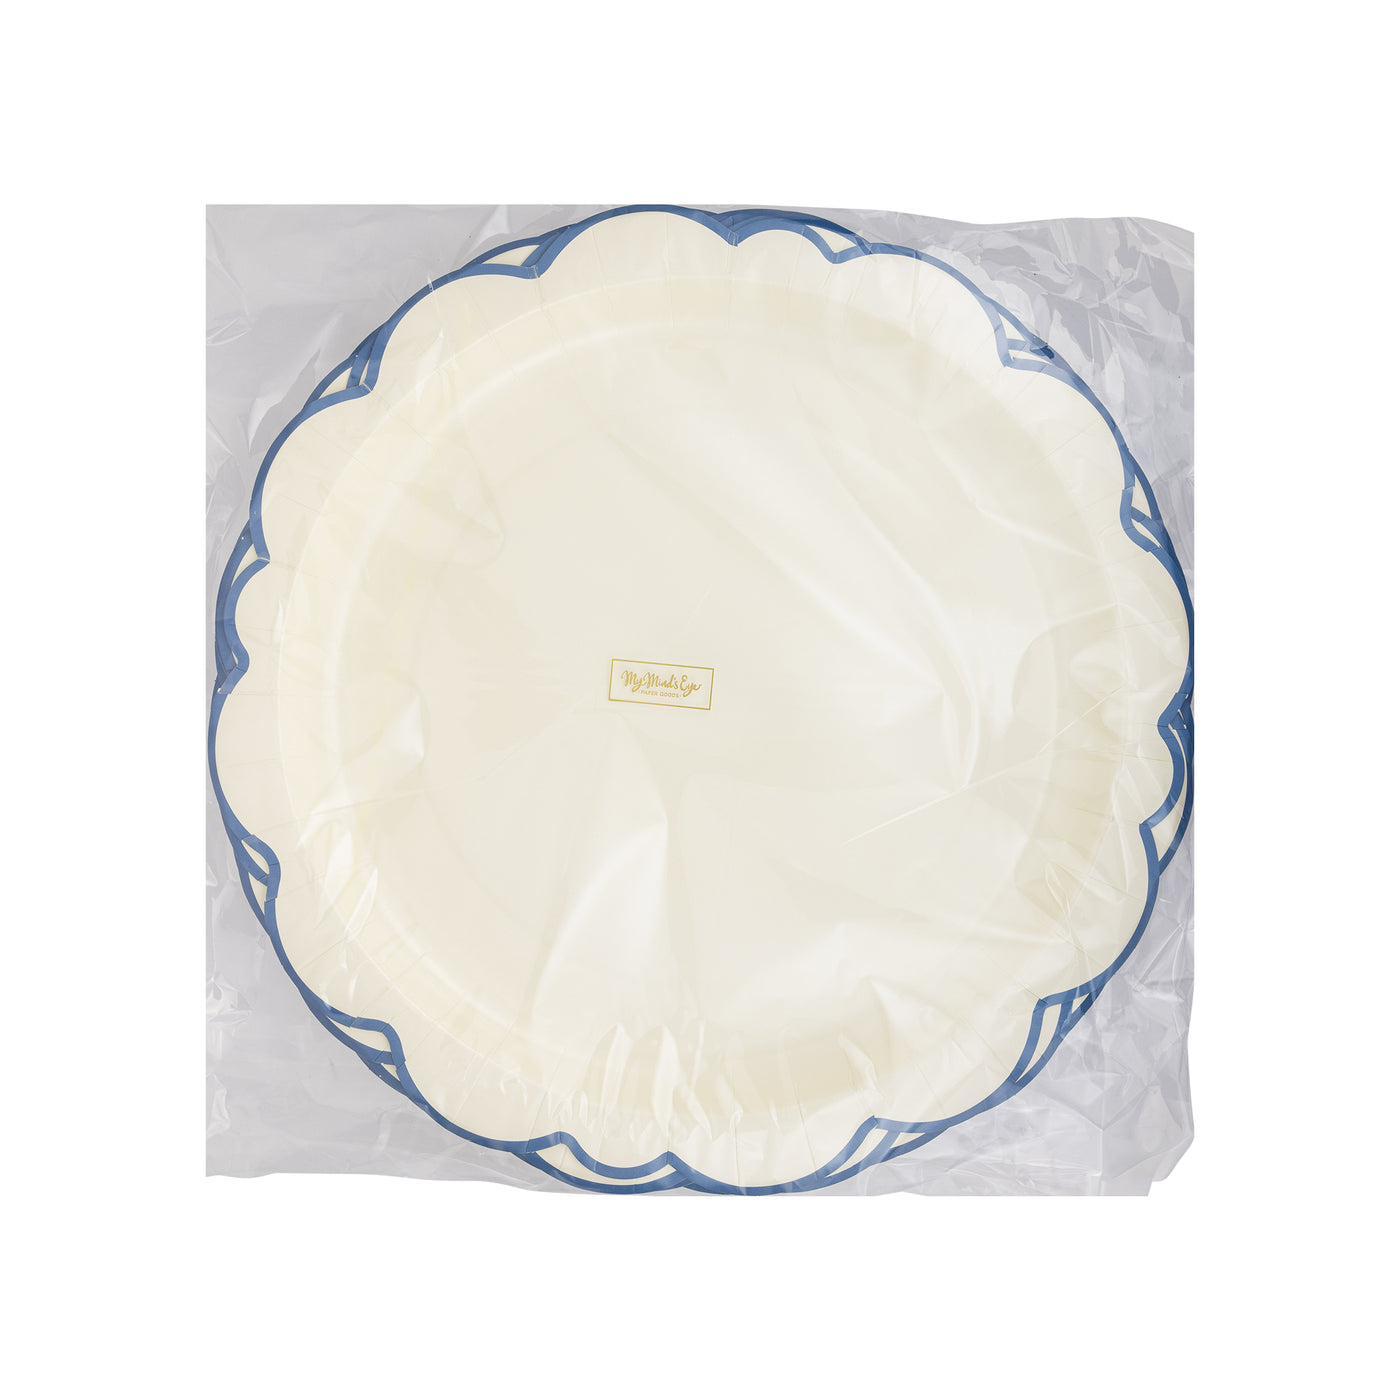 Pembroke Cream with Blue Edge 12" Paper Plate